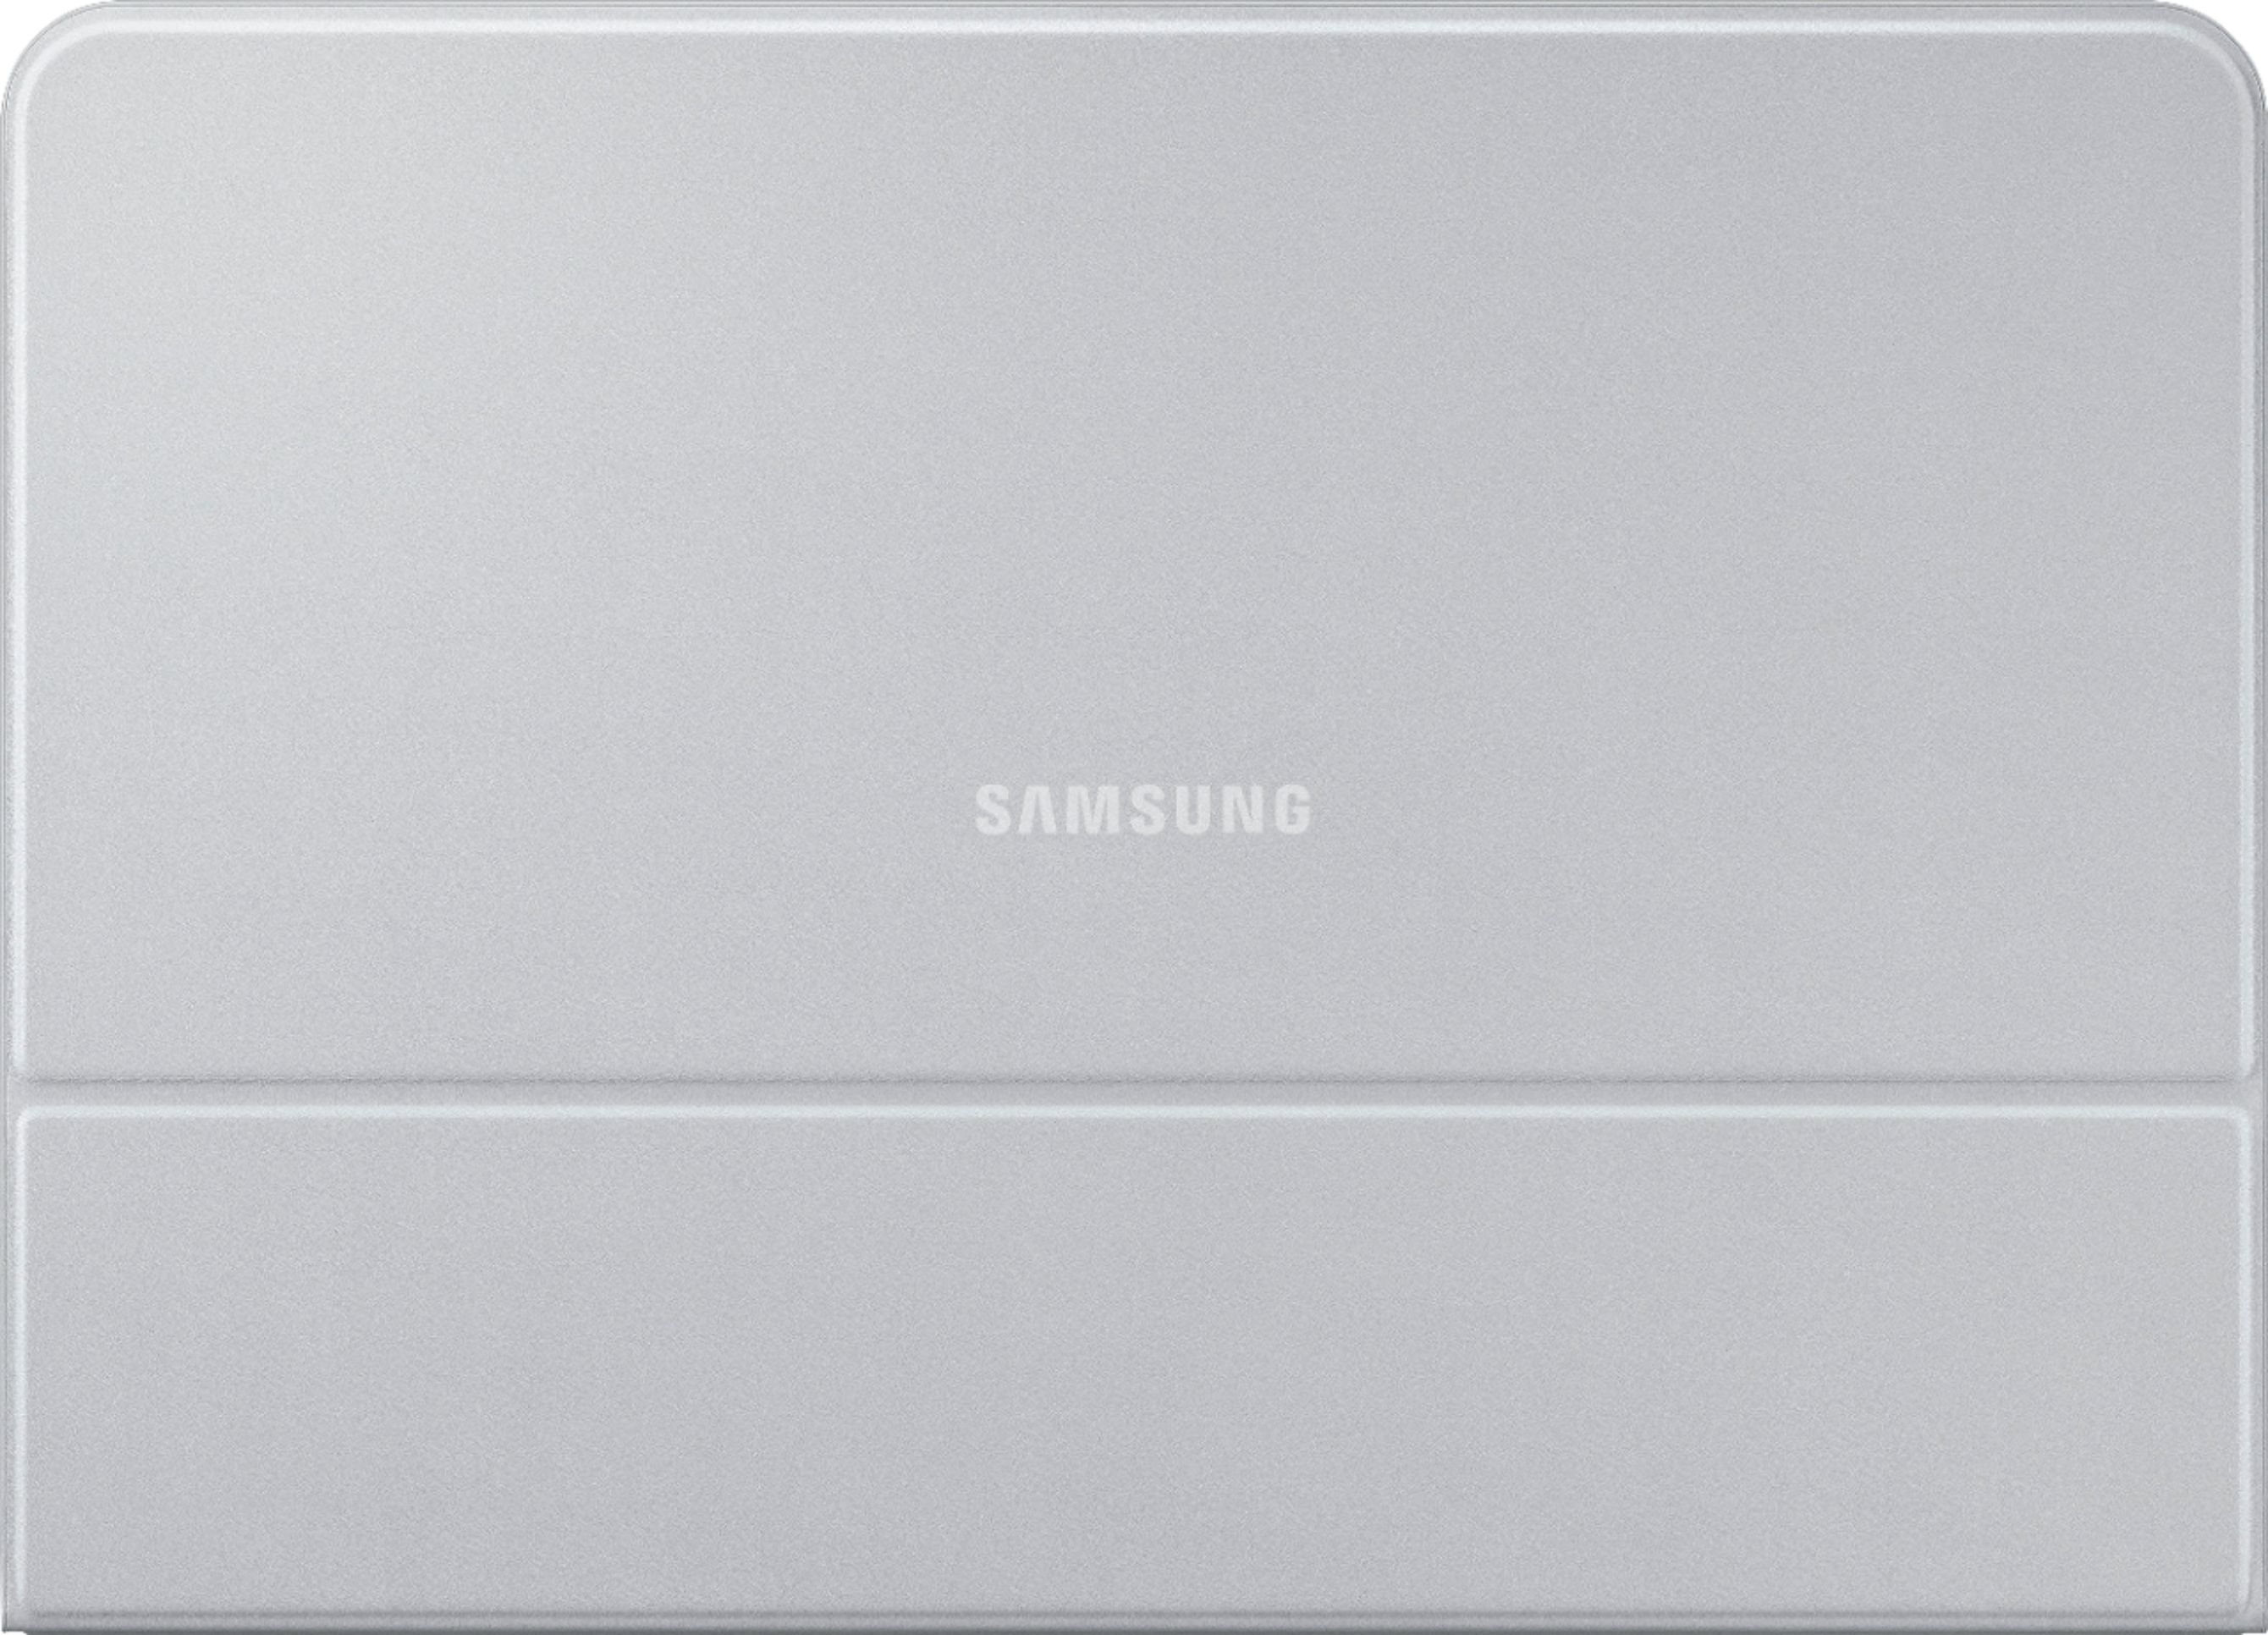 Samsung - Keyboard Case for Galaxy Tab S3 - Gray - .99